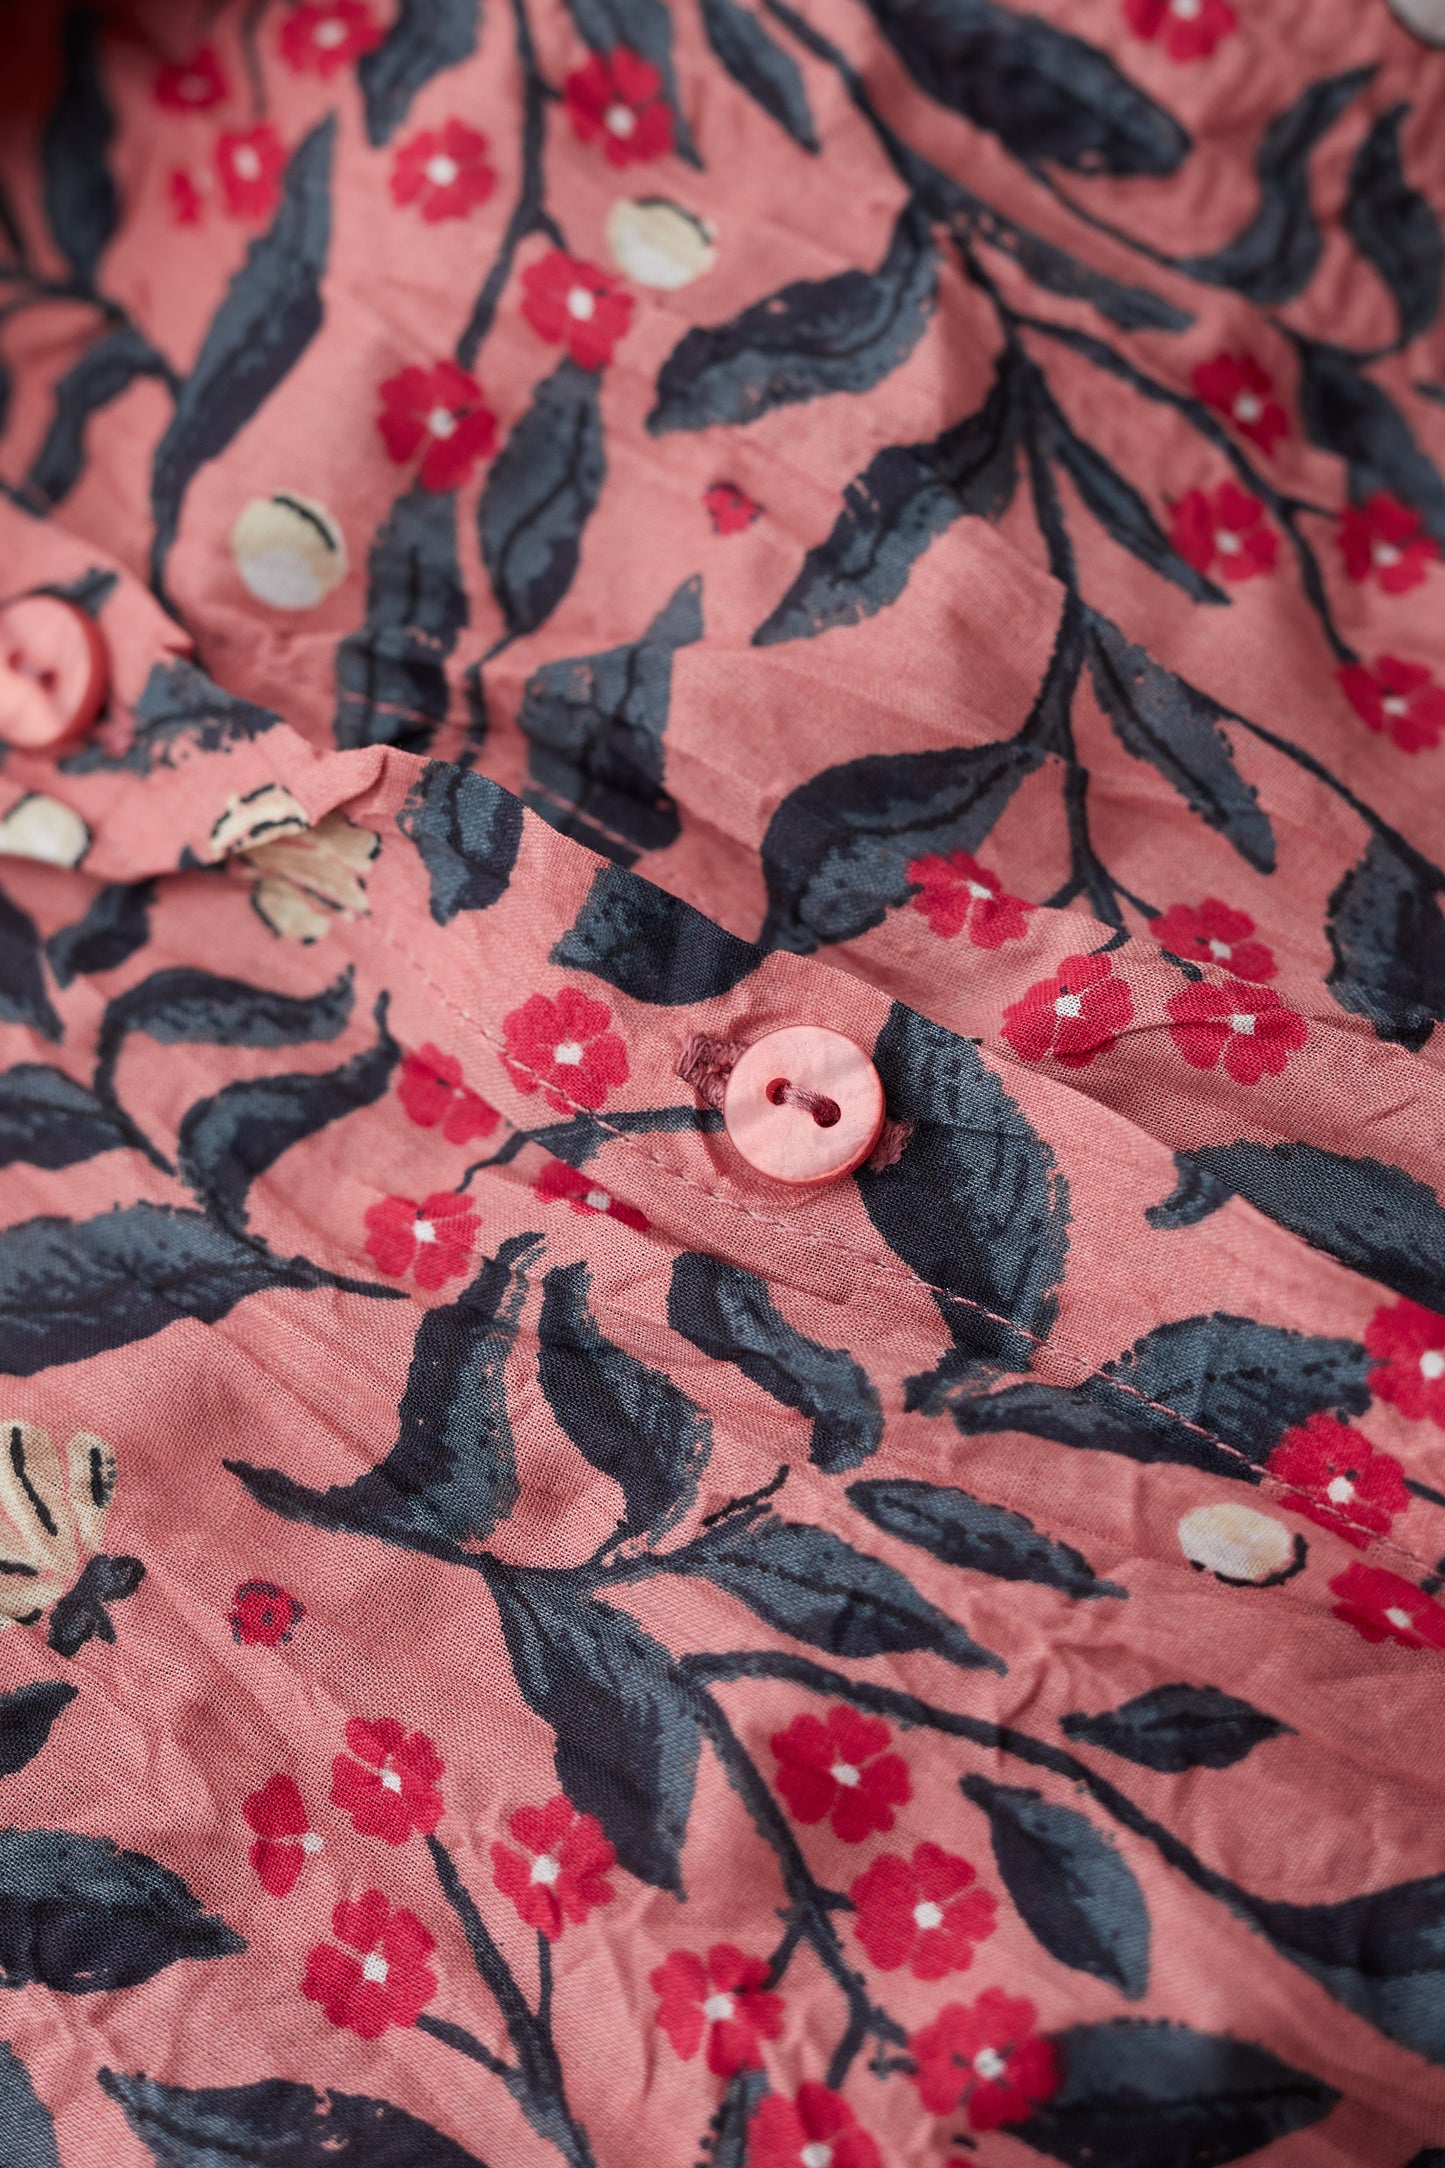 Seasalt Larissa Shirt - Ceramic Floral Rose Dew